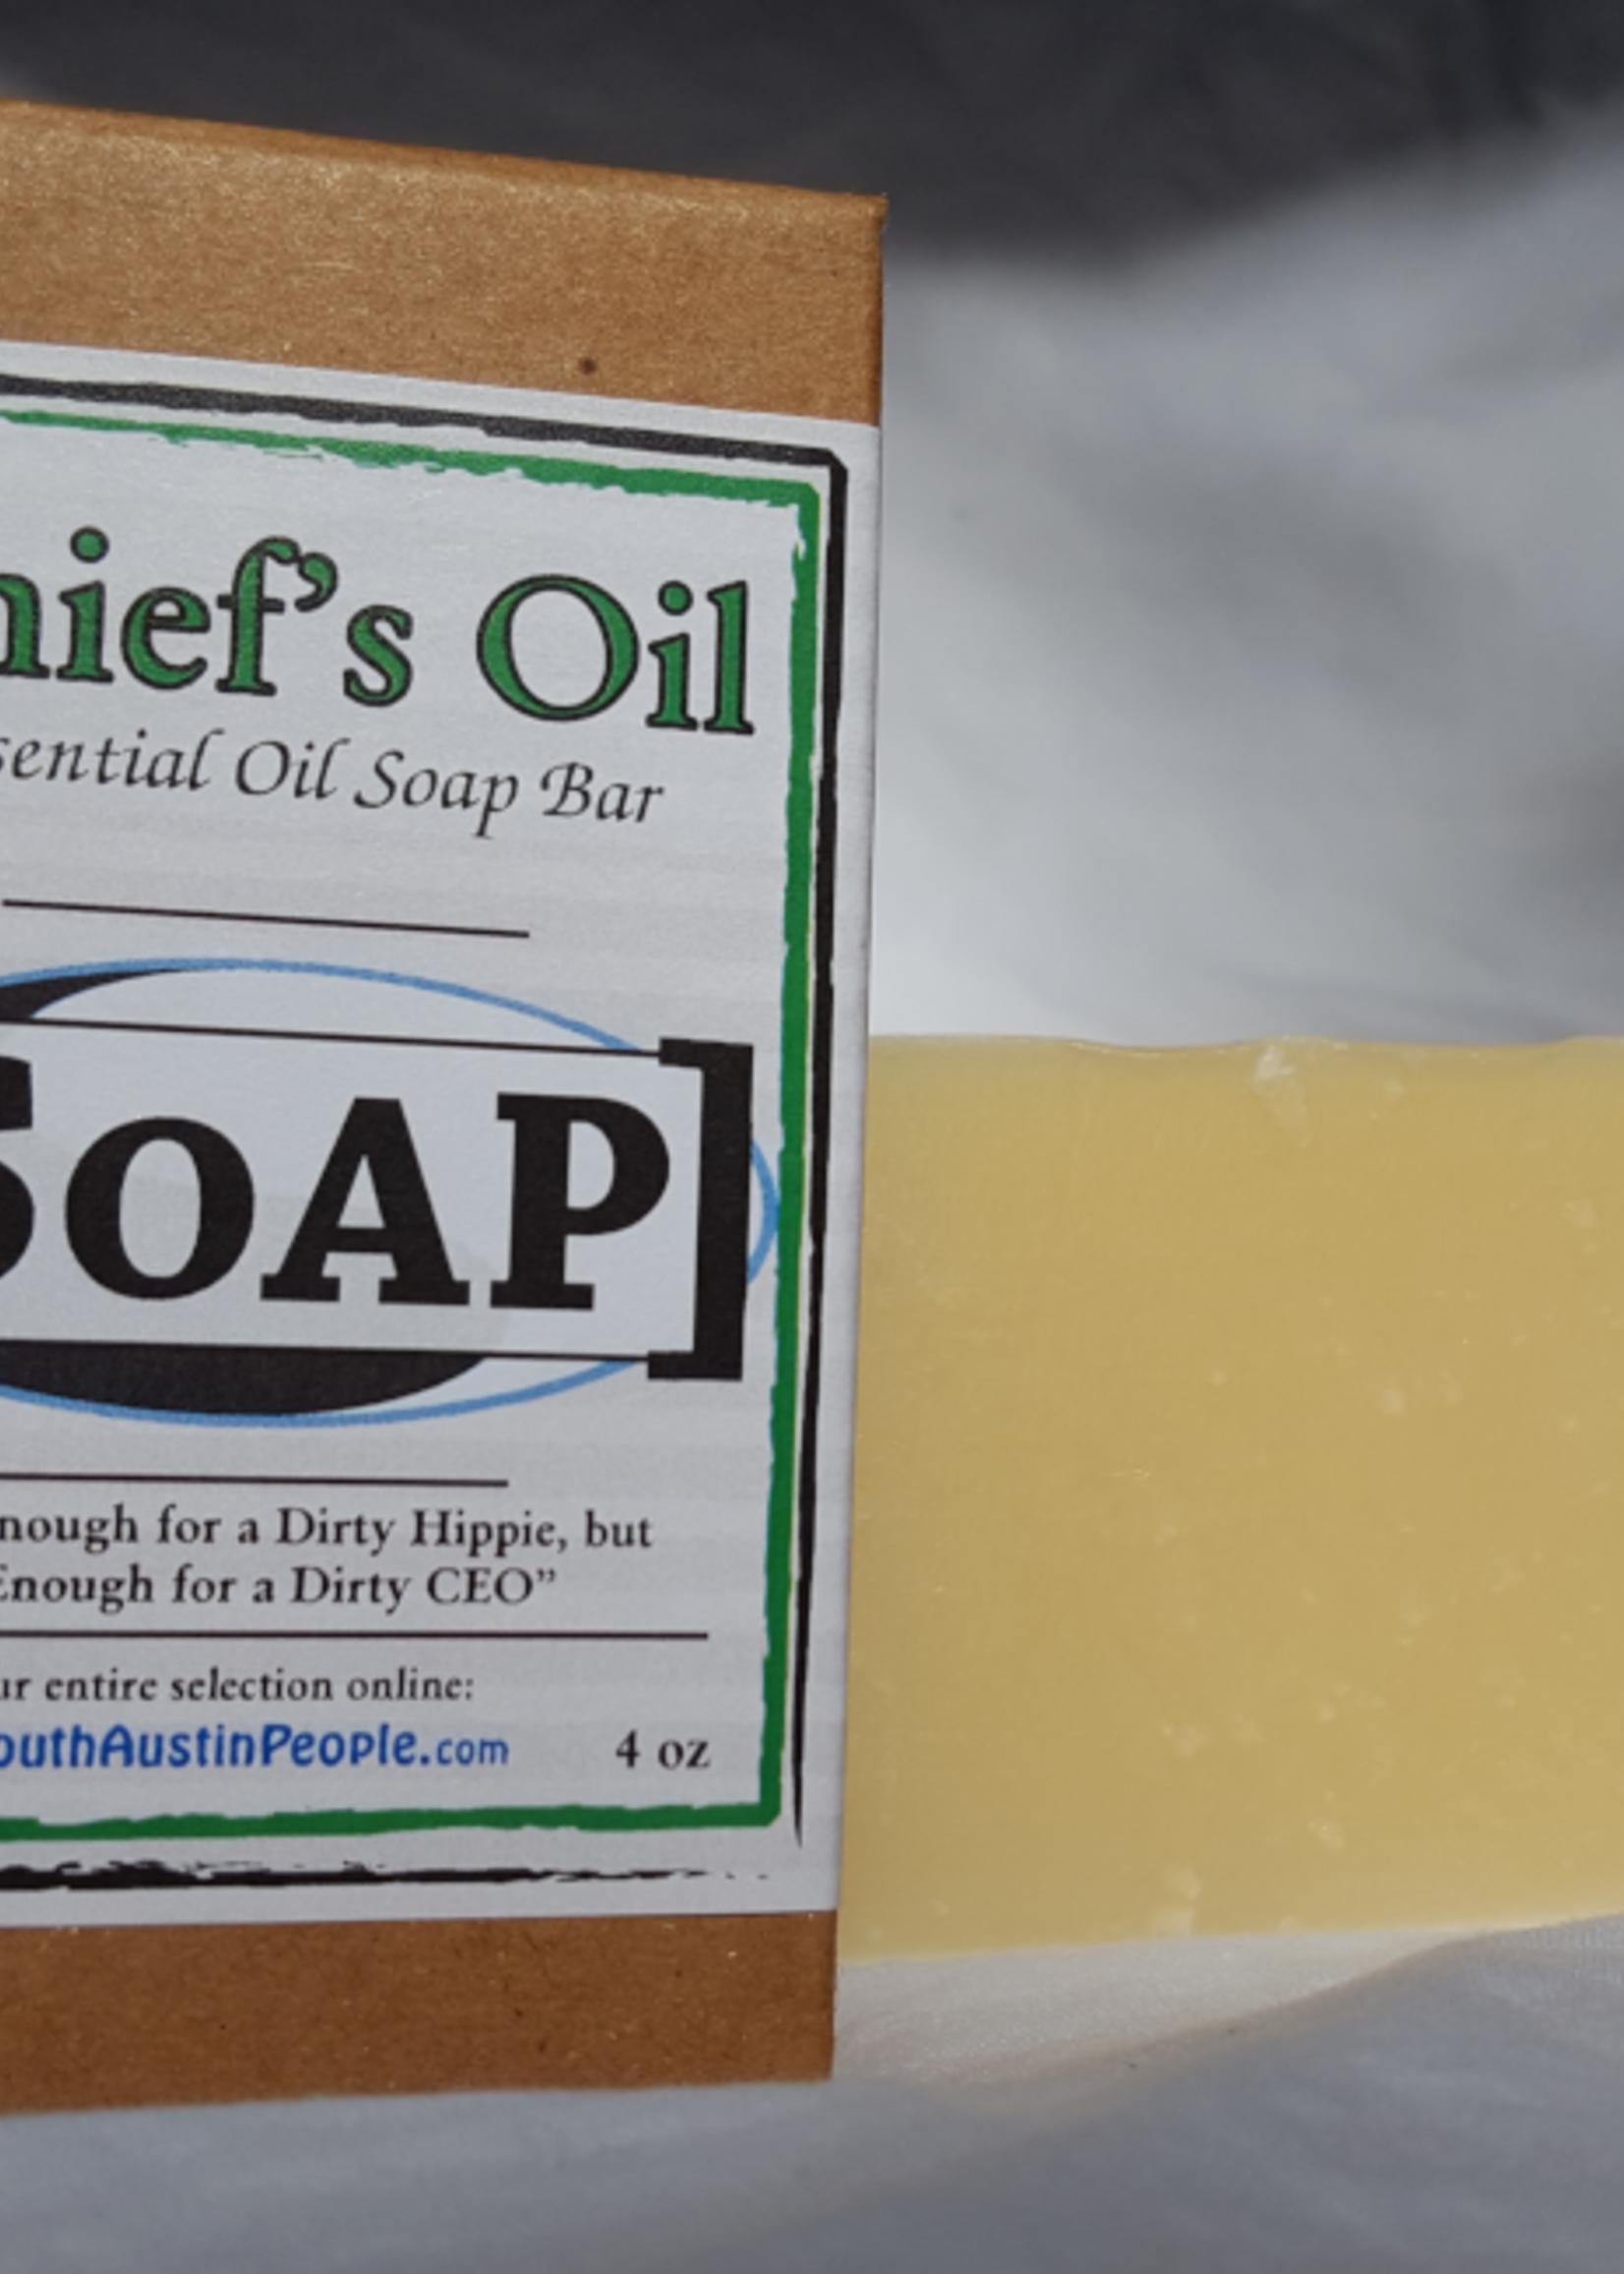 South Austin People Thief's Oil Soap Bar 4 oz